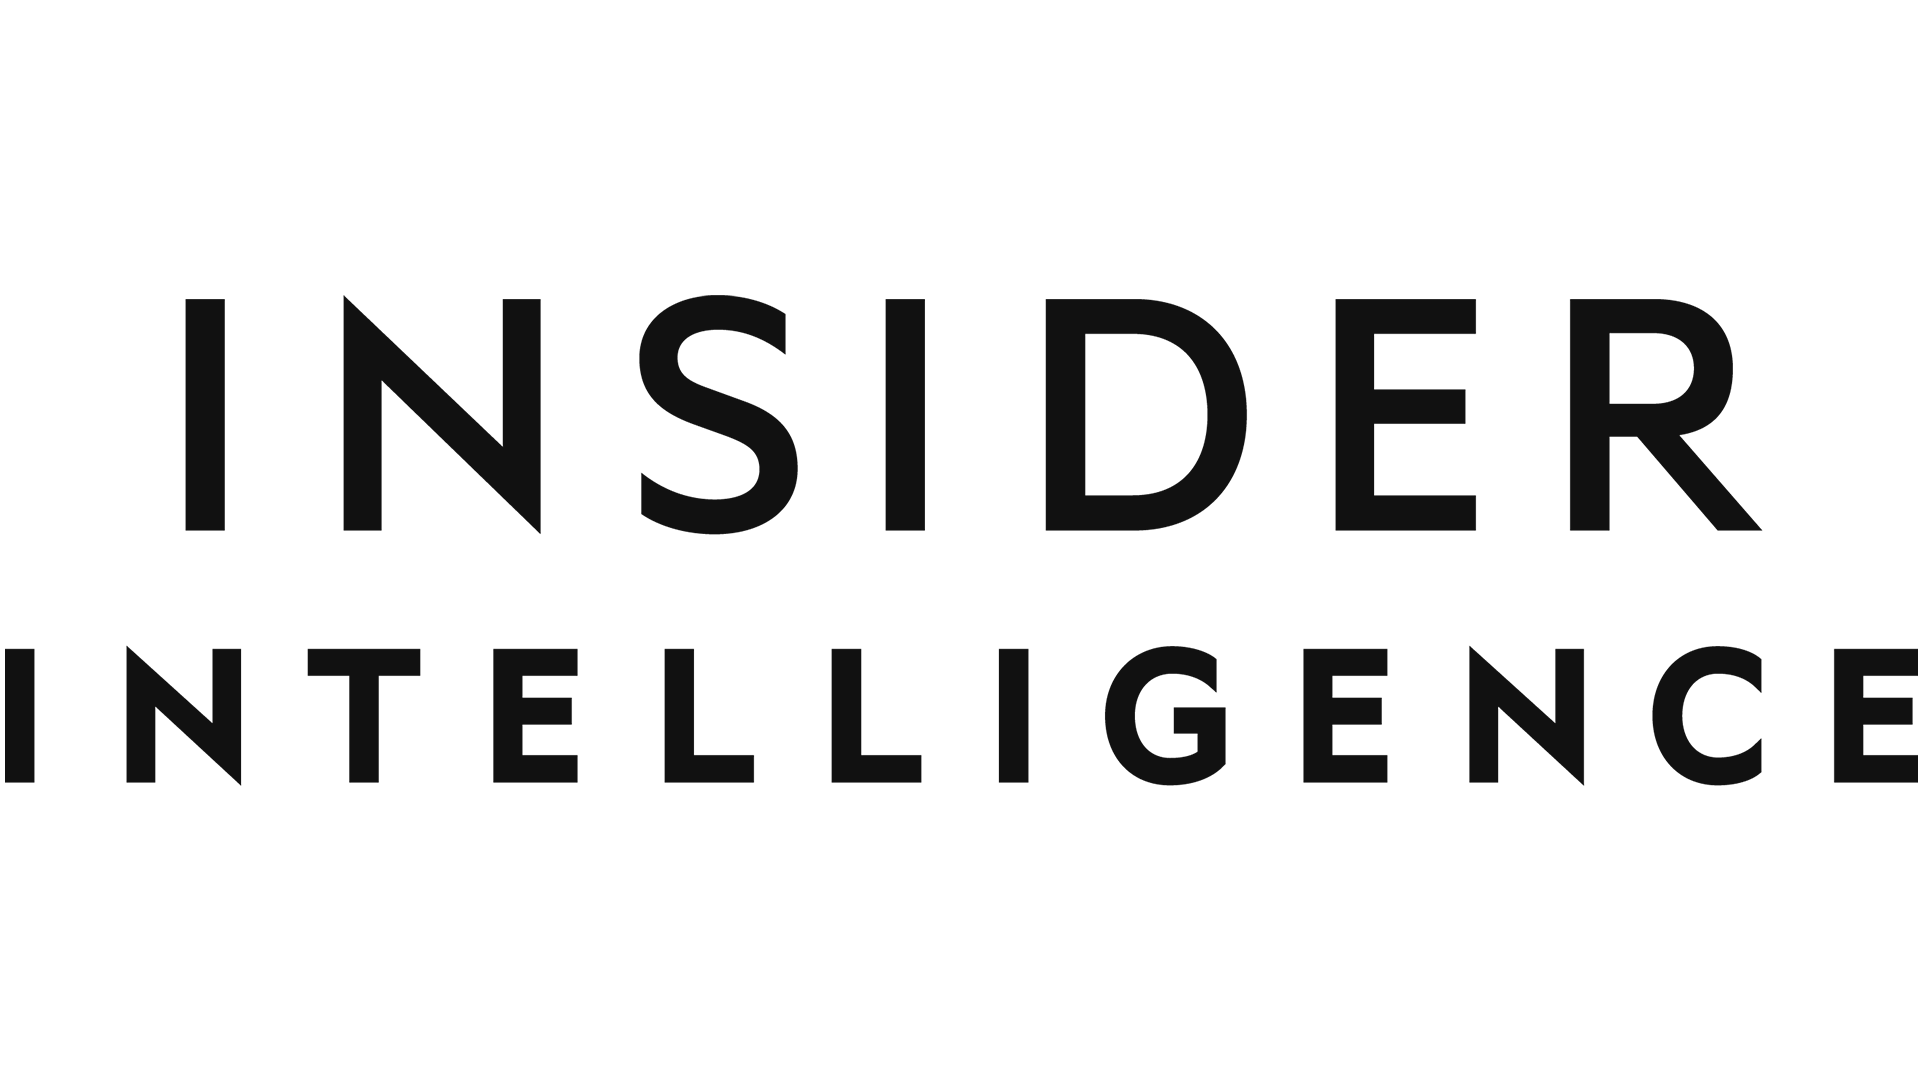 Insider Intelligence market research firm New York